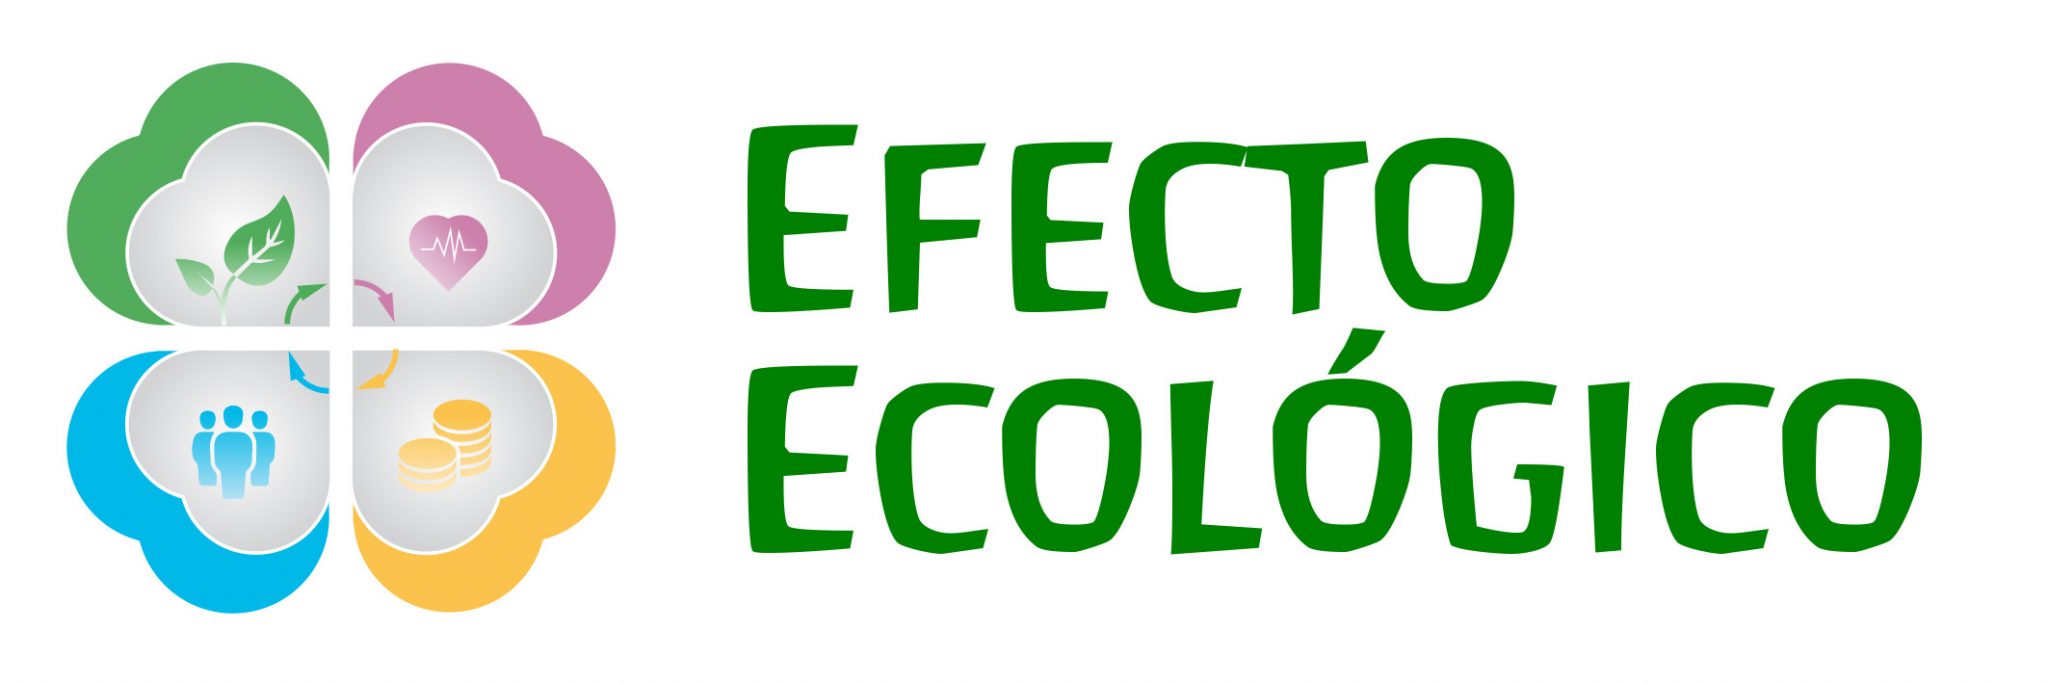 Efecto Ecológico